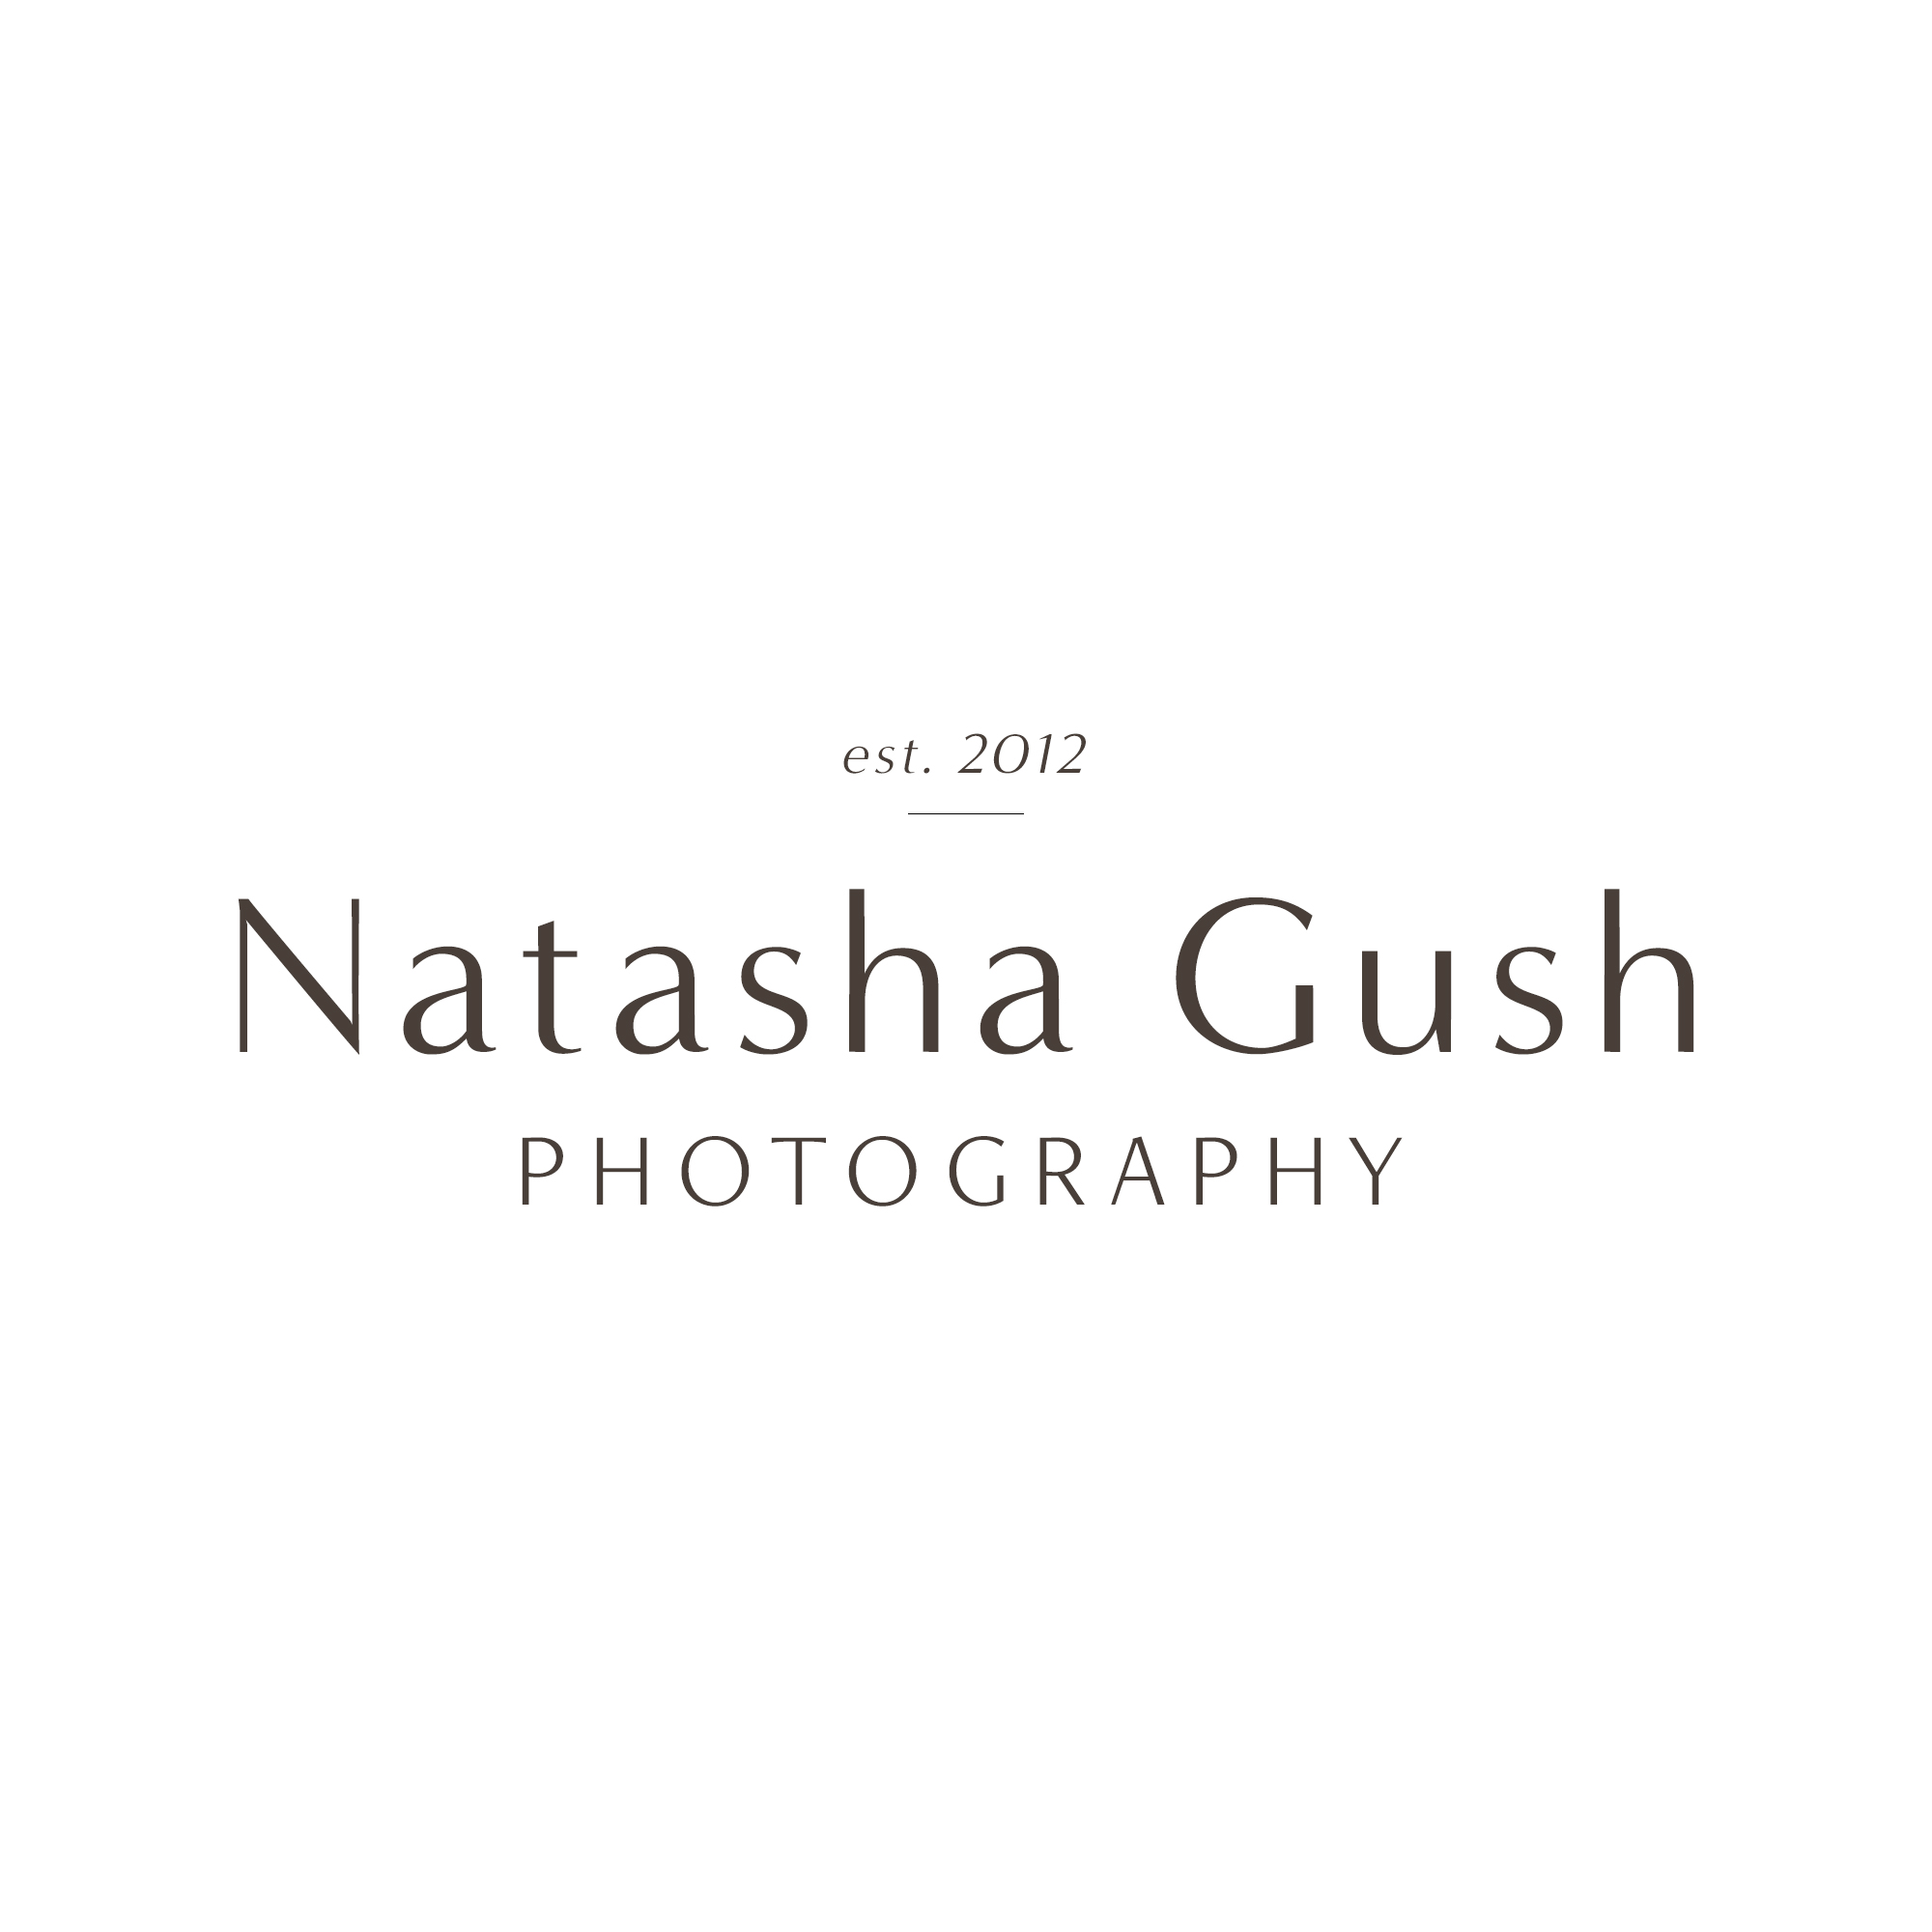 Natasha Gush Photography's logo